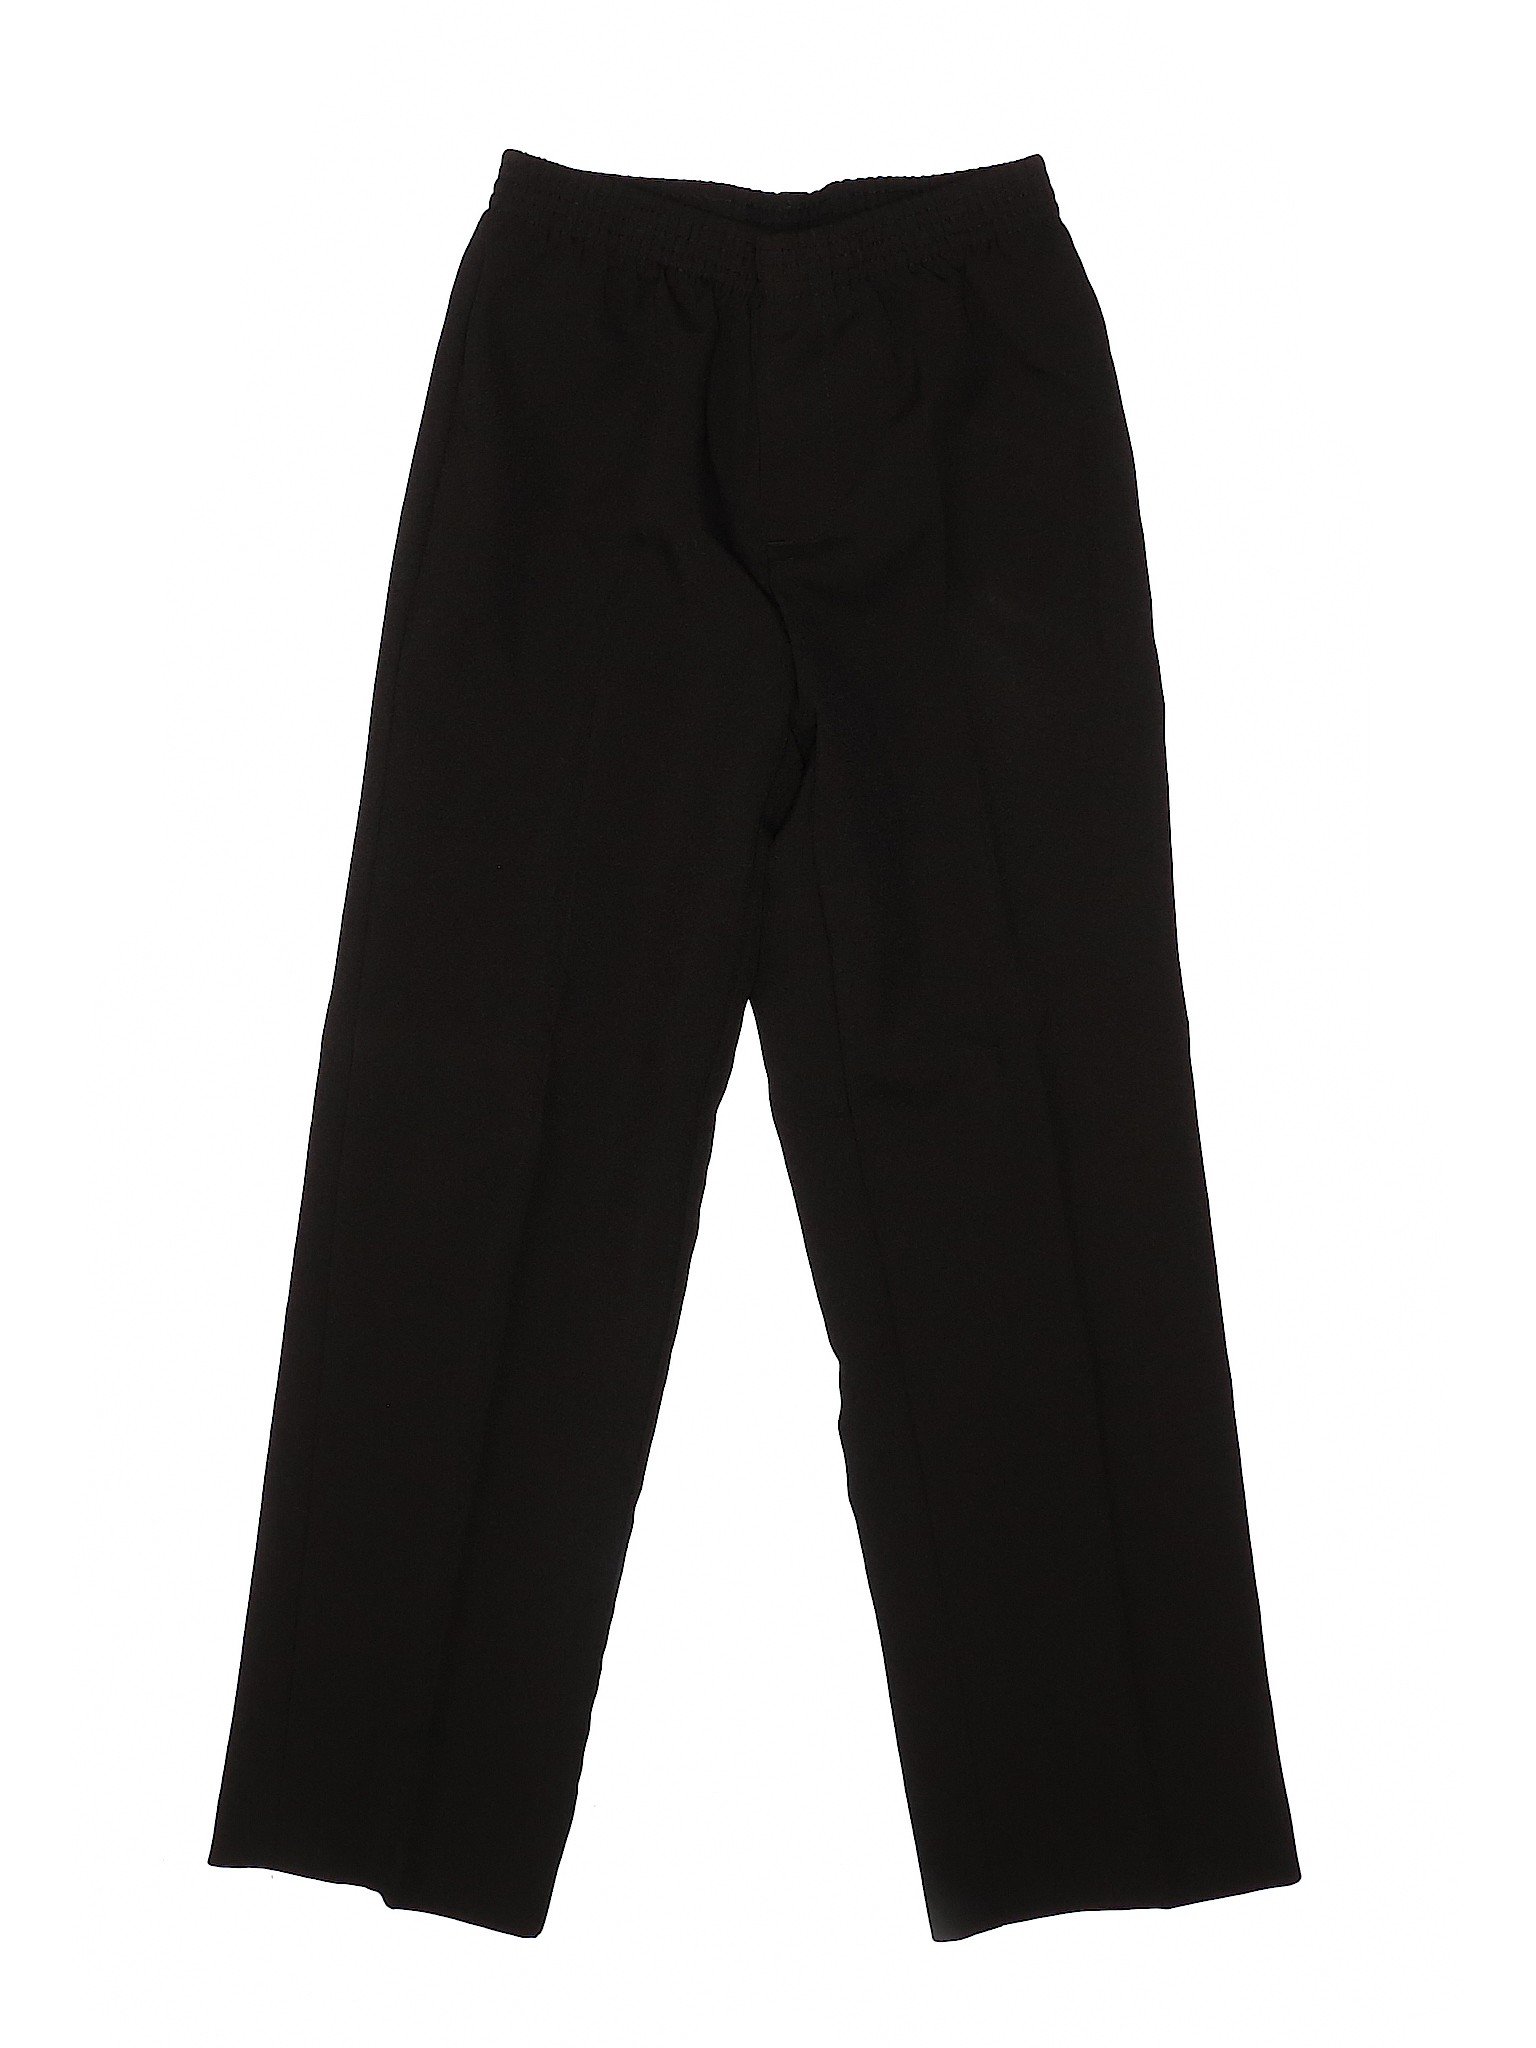 George Boys Black Dress Pants 6 | eBay